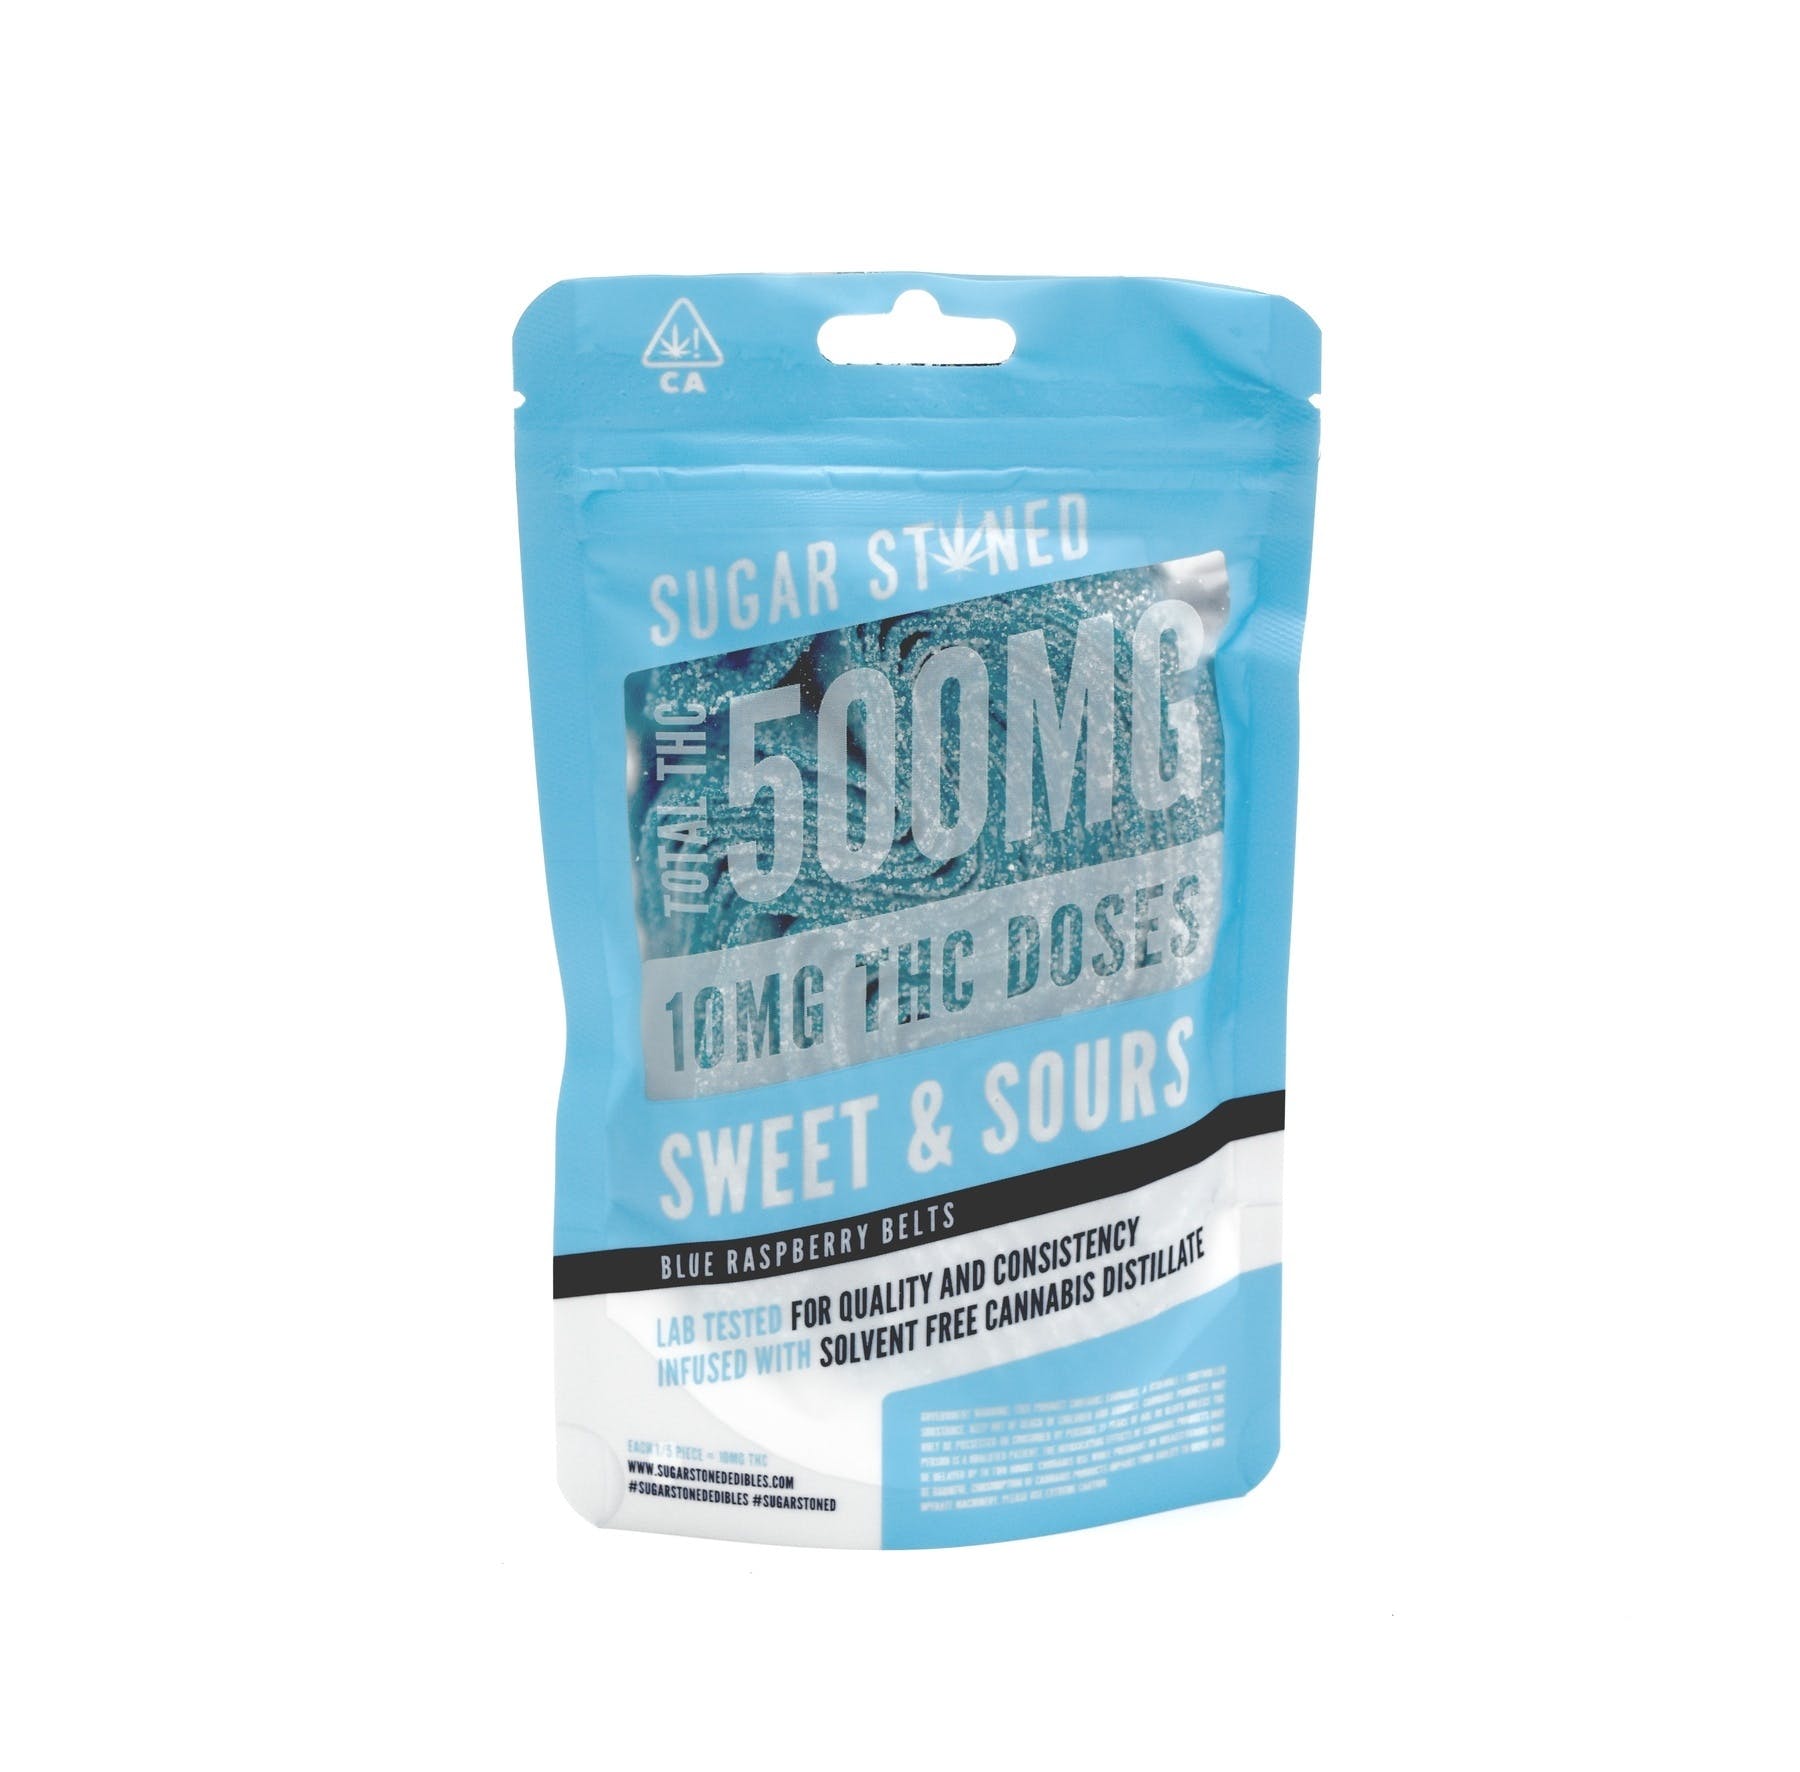 edible-sugar-stoned-sour-belts-500mg